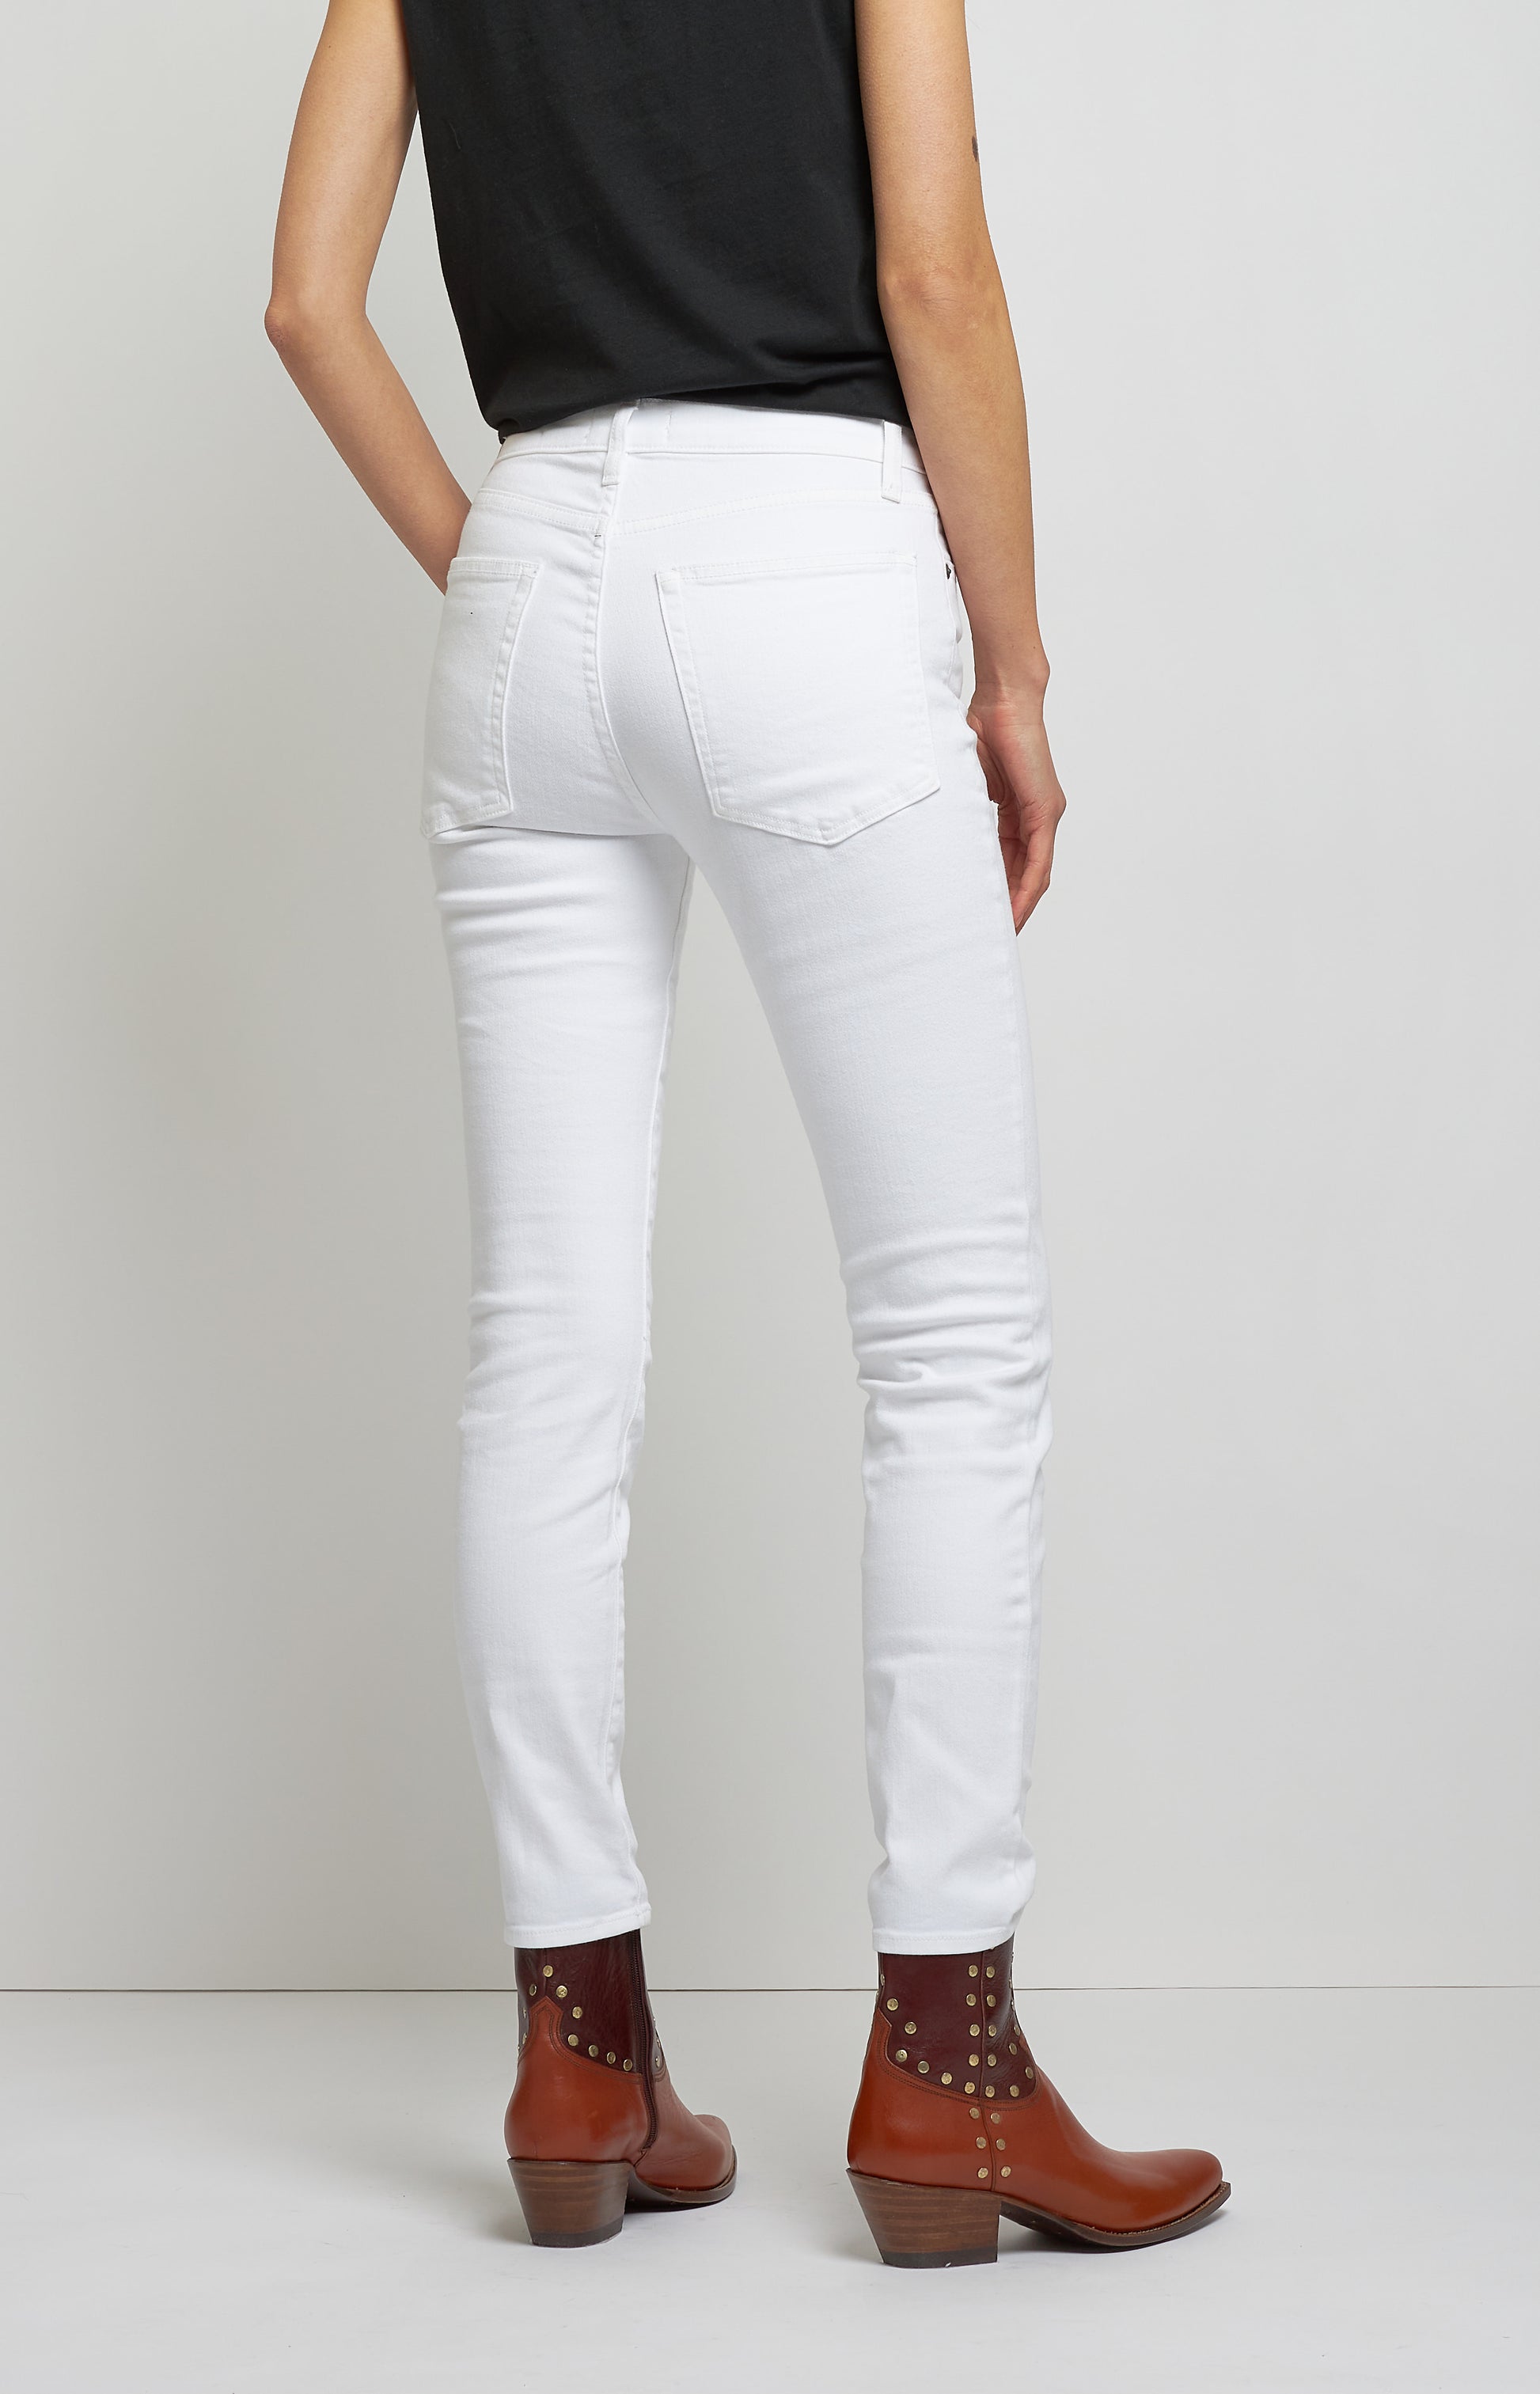 Jeans Mid Rise in White WashNili Lotan - Anita Hass